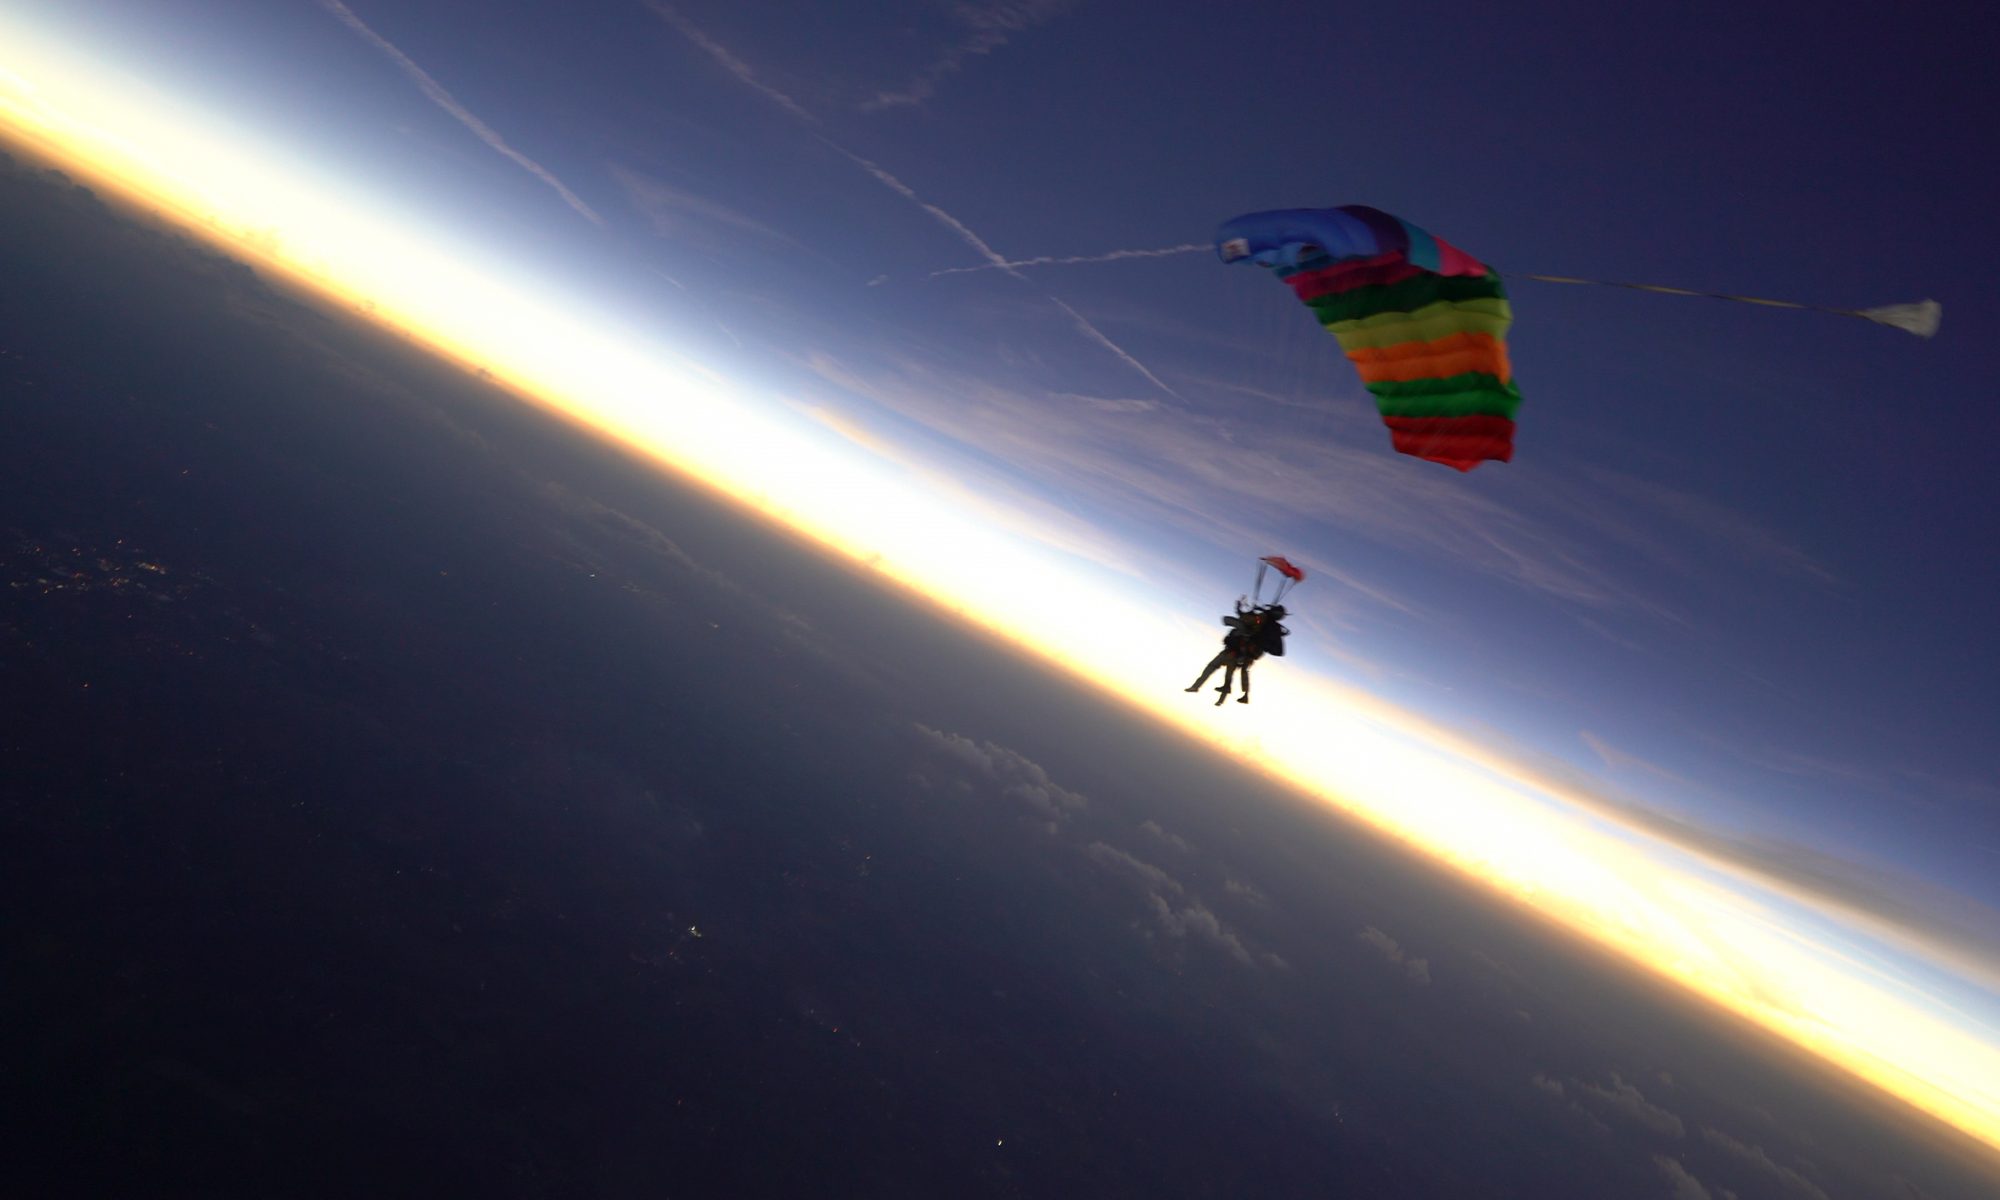 Skydiver snapshot photo